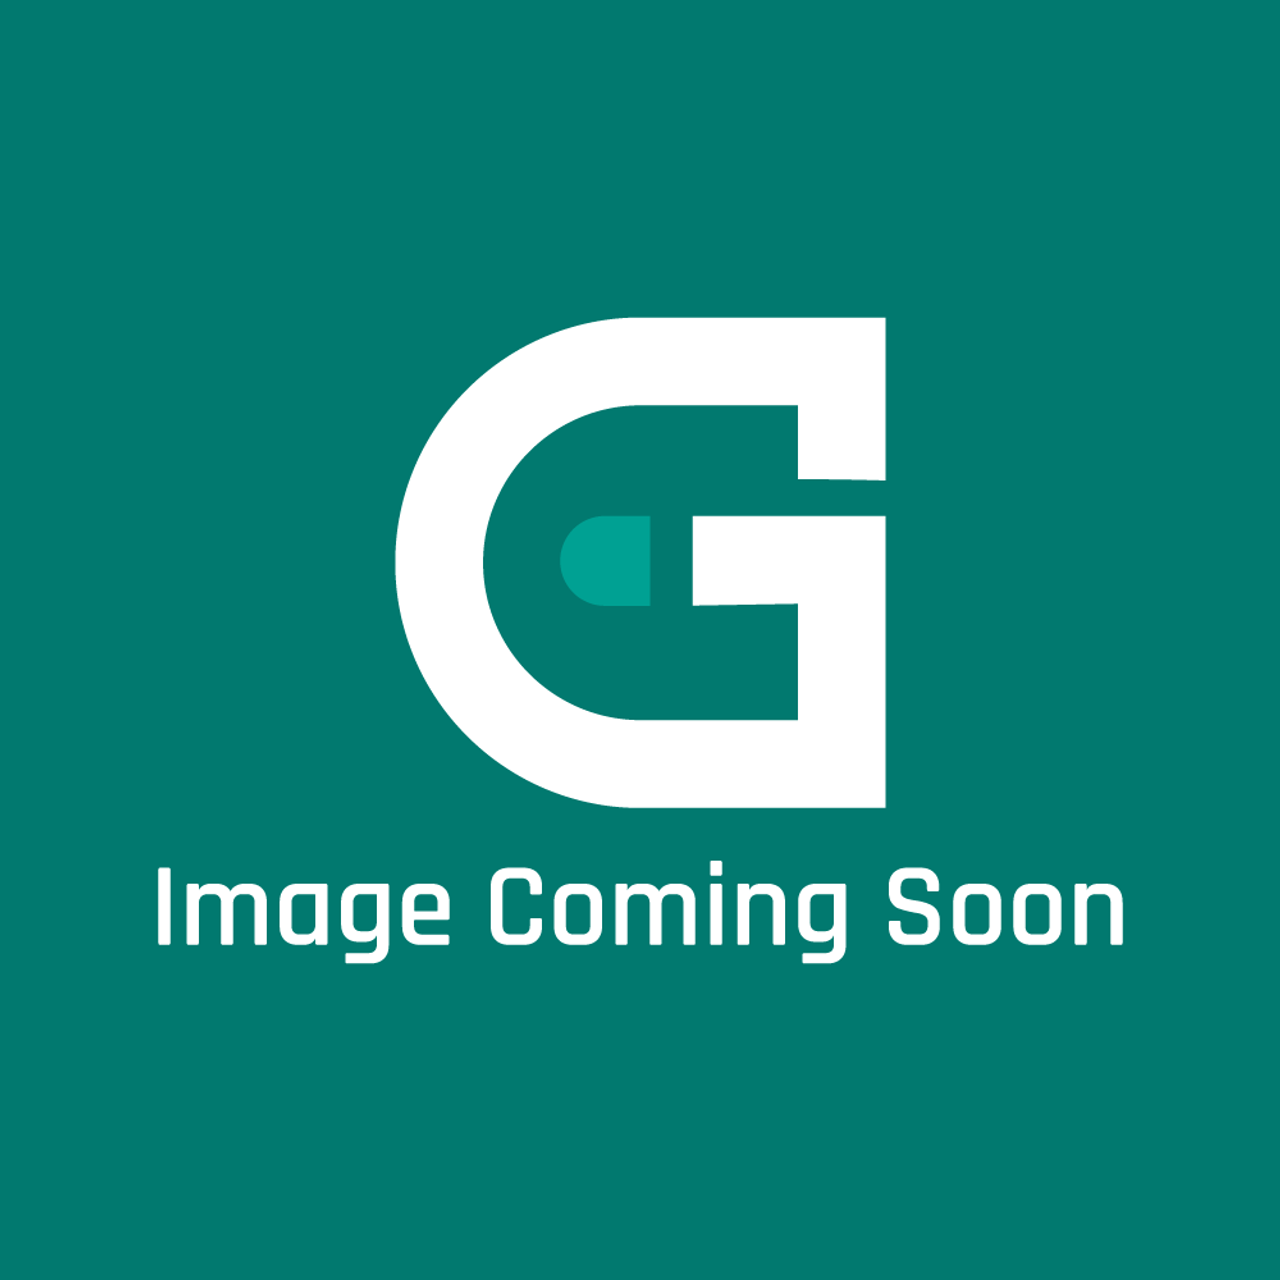 AGA Marvel AG4M251641 - Regulator Link Pipe - Image Coming Soon!